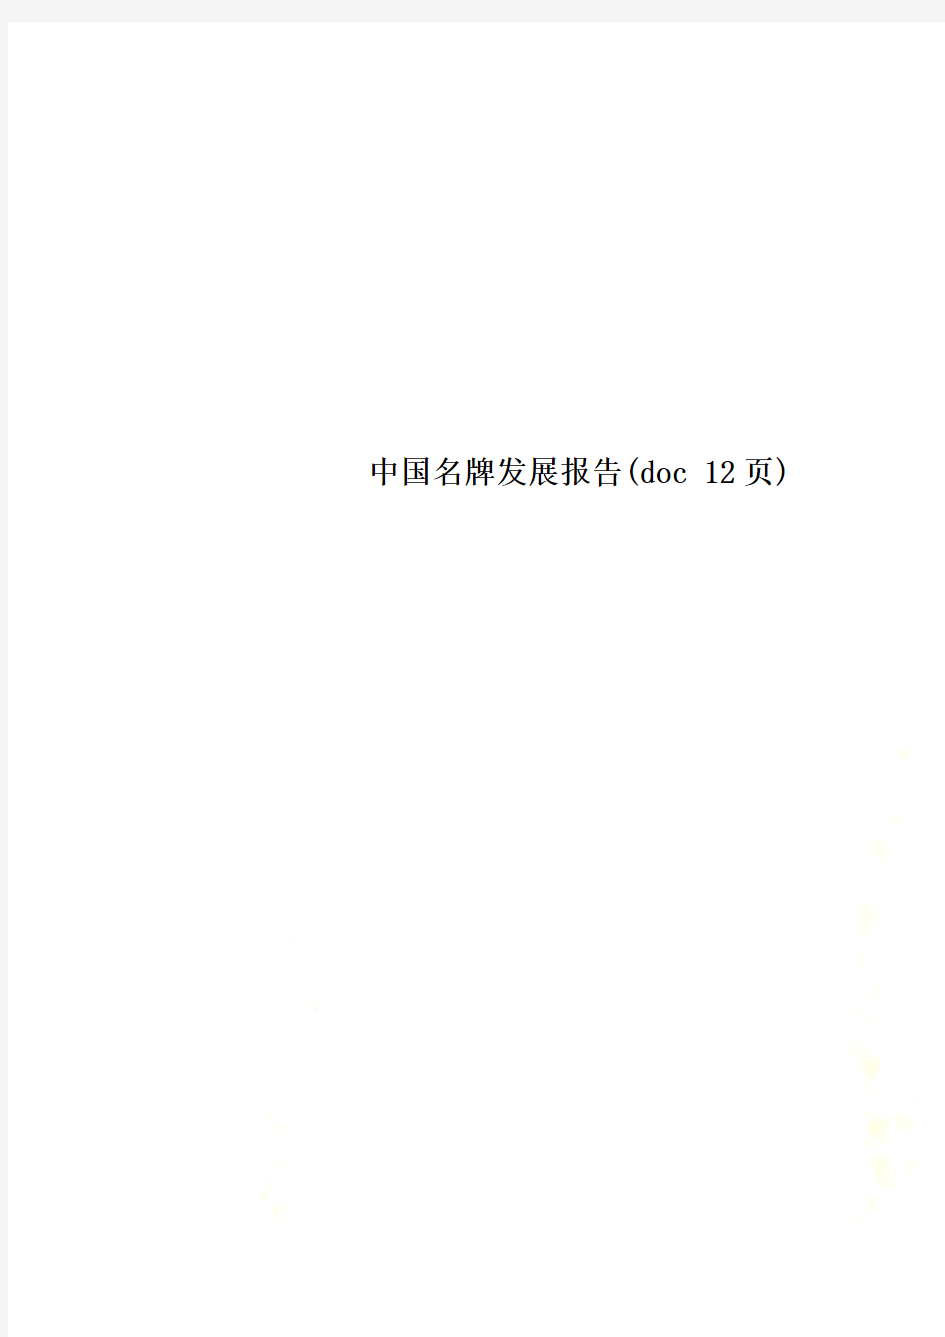 中国名牌发展报告(doc 12页)